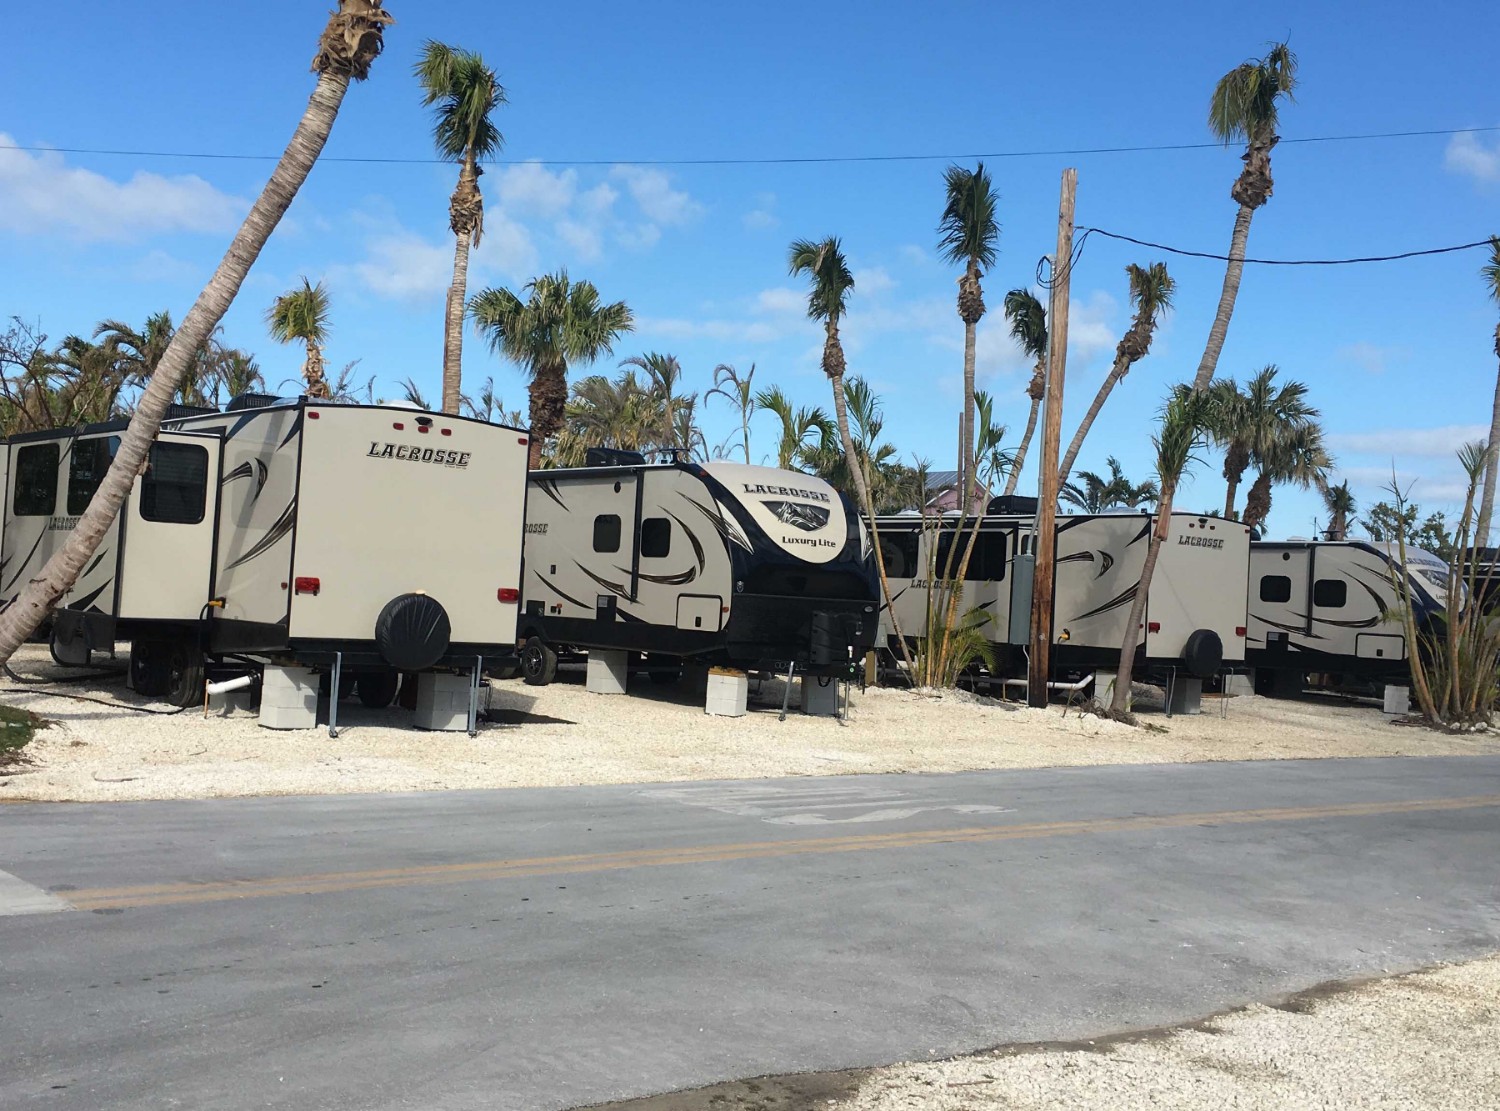 Florida Keys FEMA Trailers for Irma